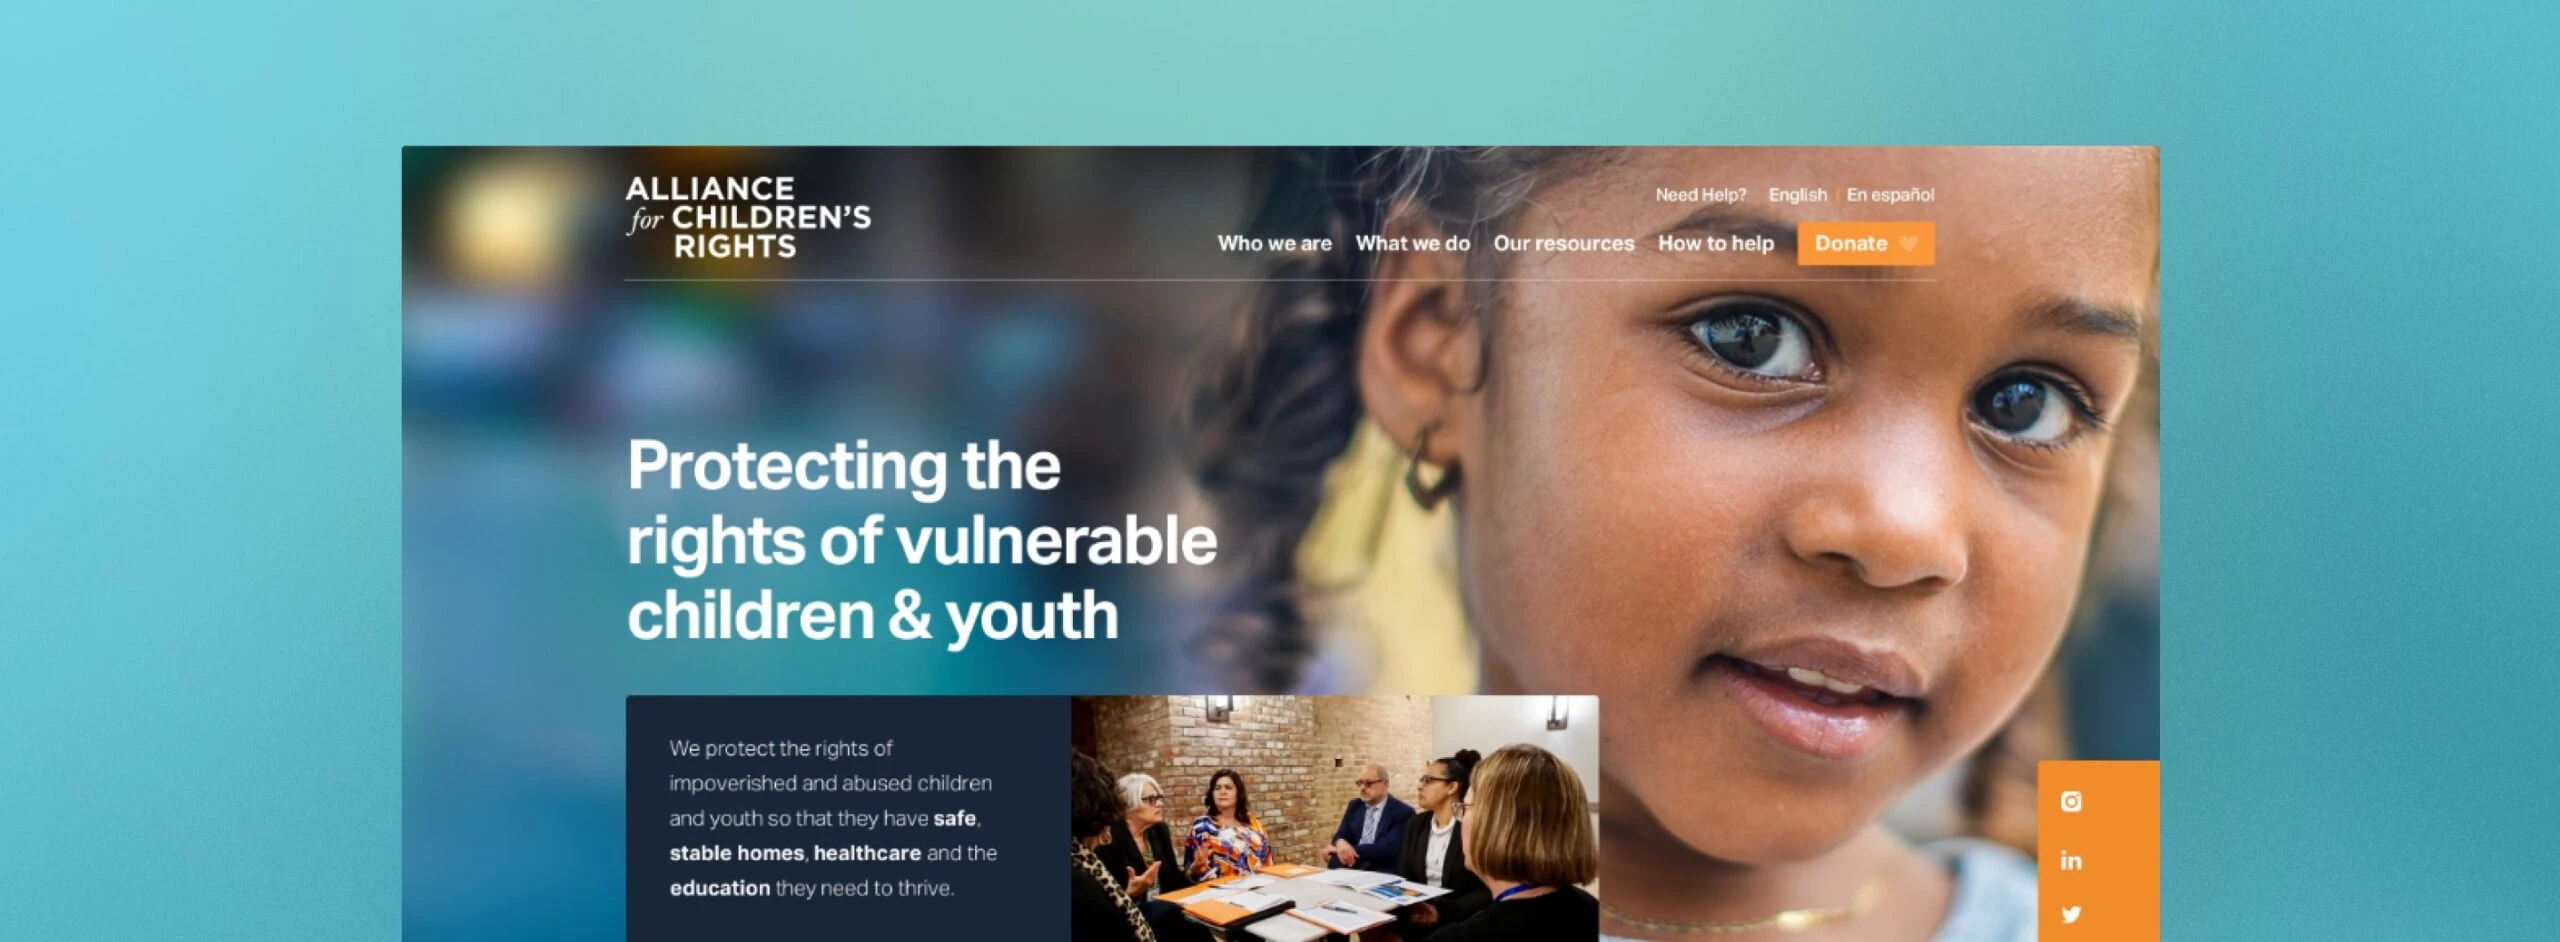 alliance for children's rights homepage web design